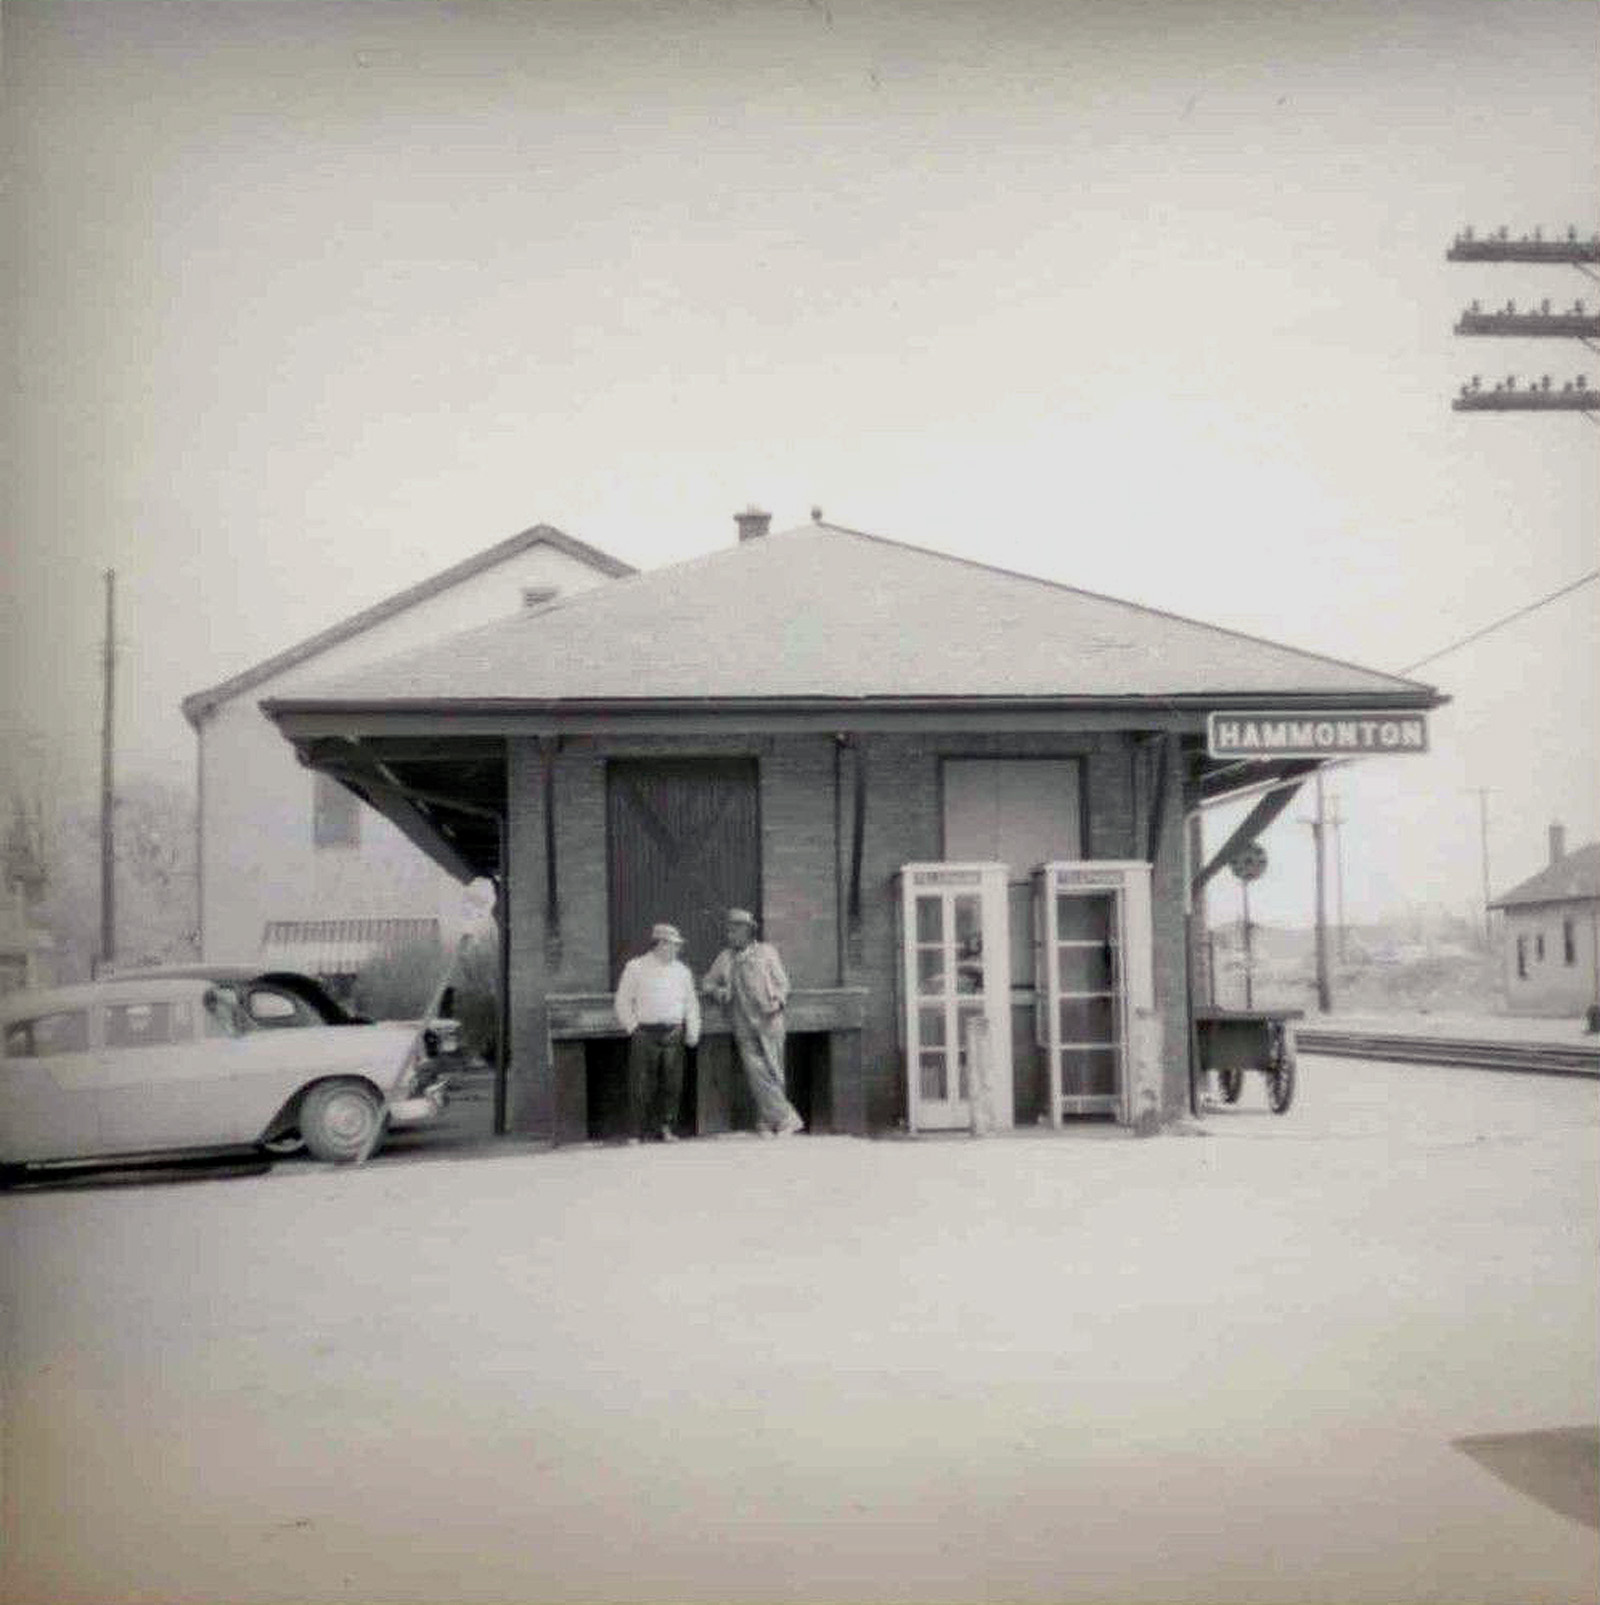 Hammonton - Said to be the Reading passenger station - 1965